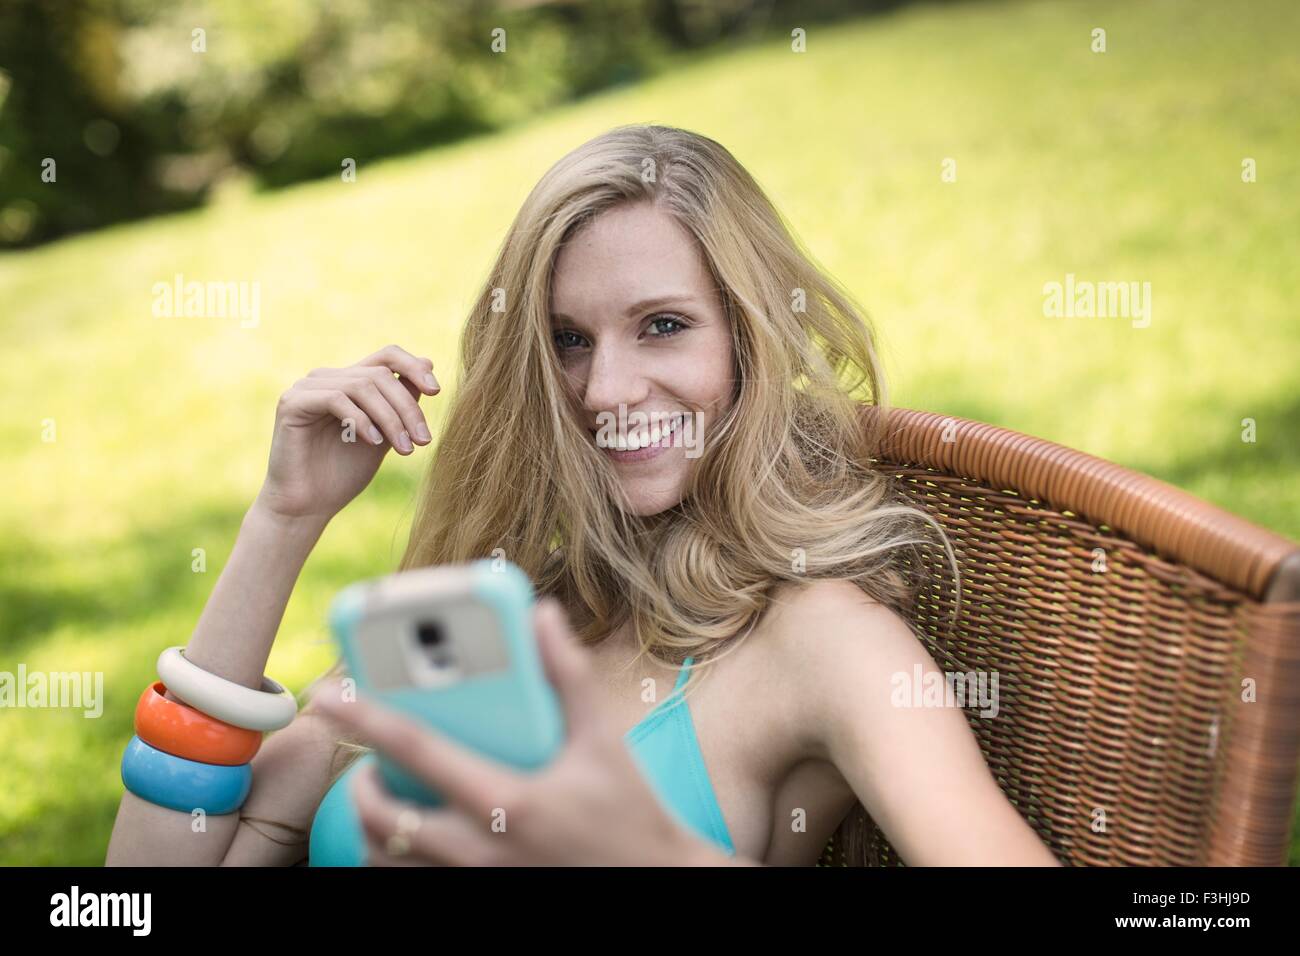 Portrait of young woman wearing bikini top using smartphone in garden Stock Photo